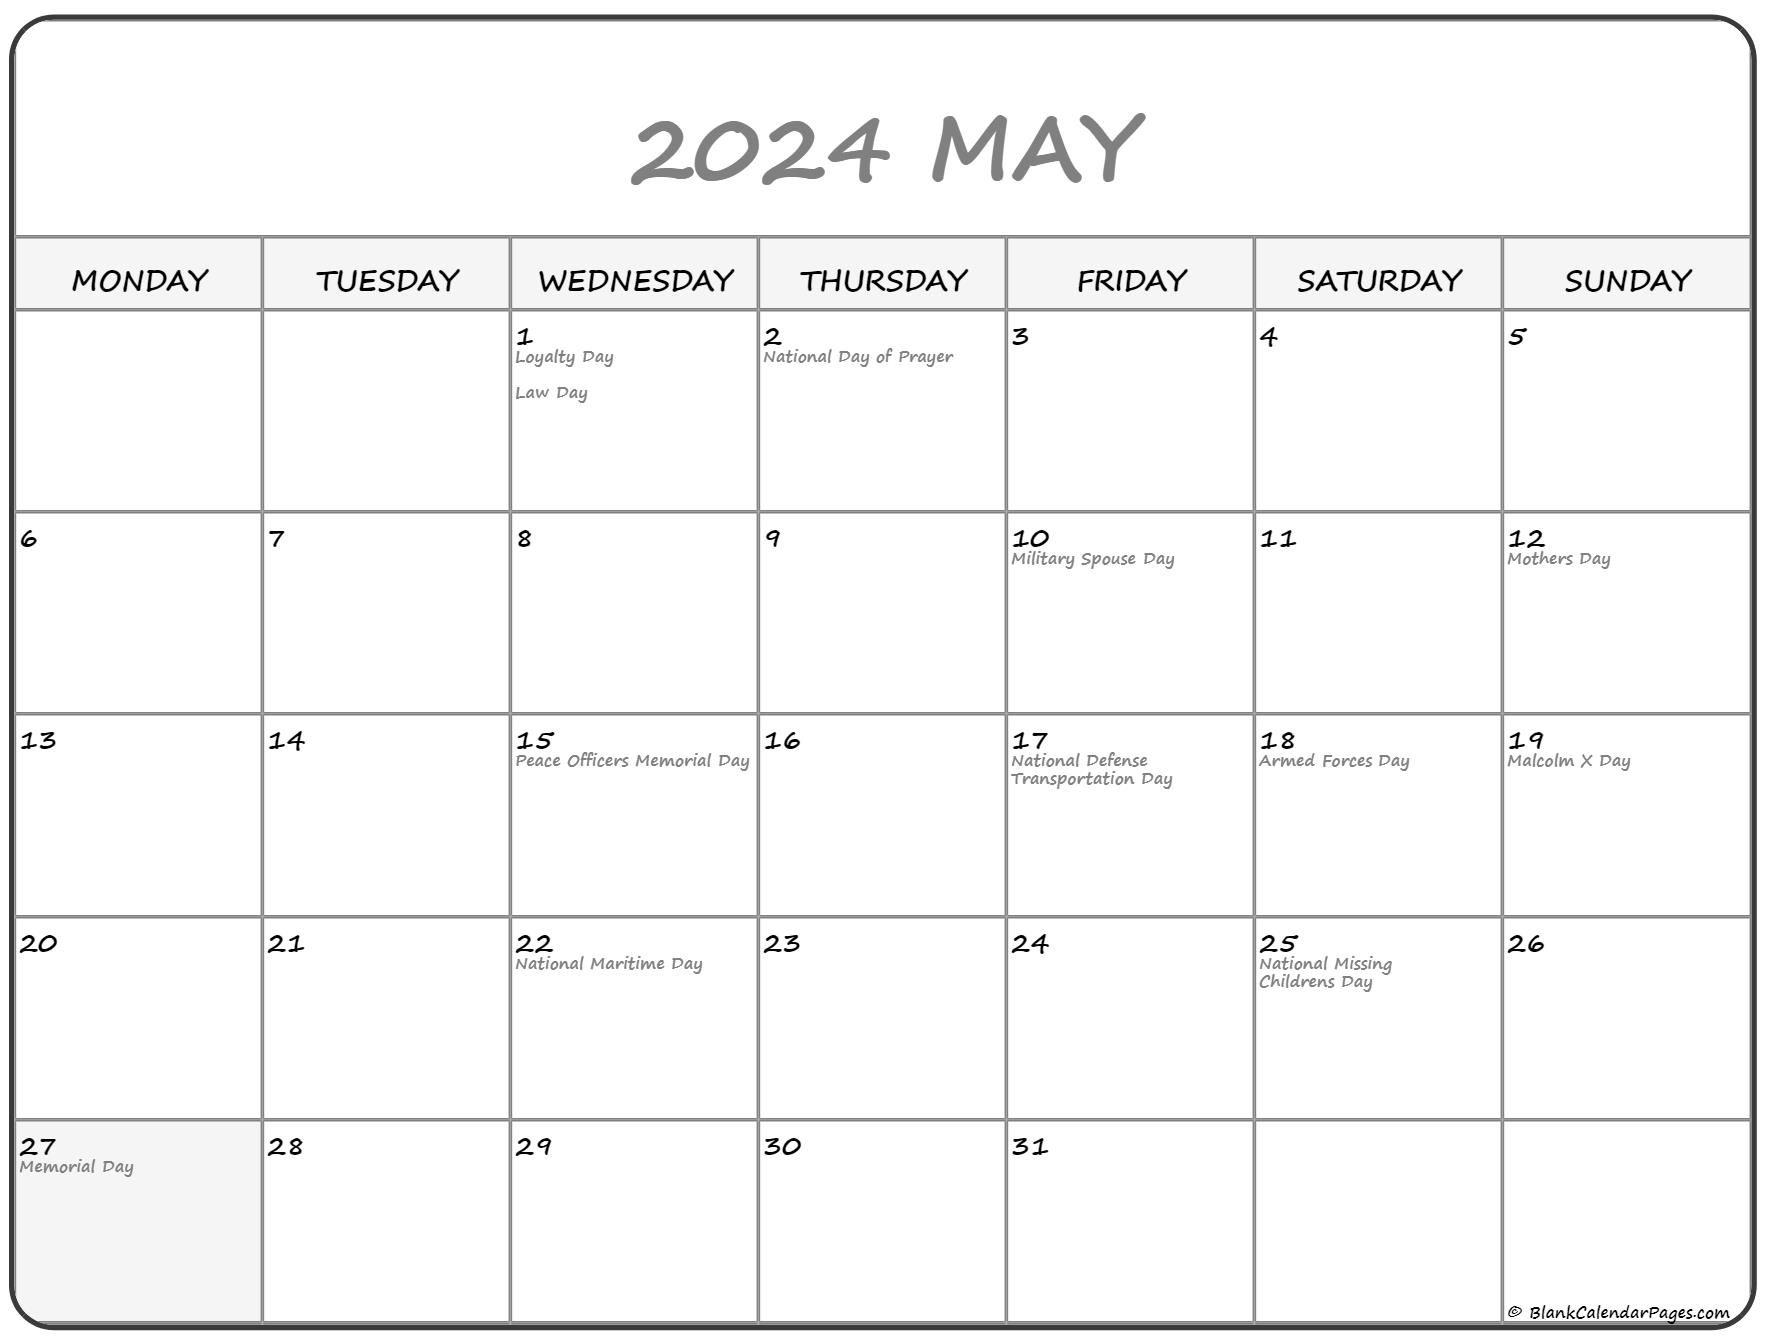 May 2021 Monday Calendar Monday to Sunday